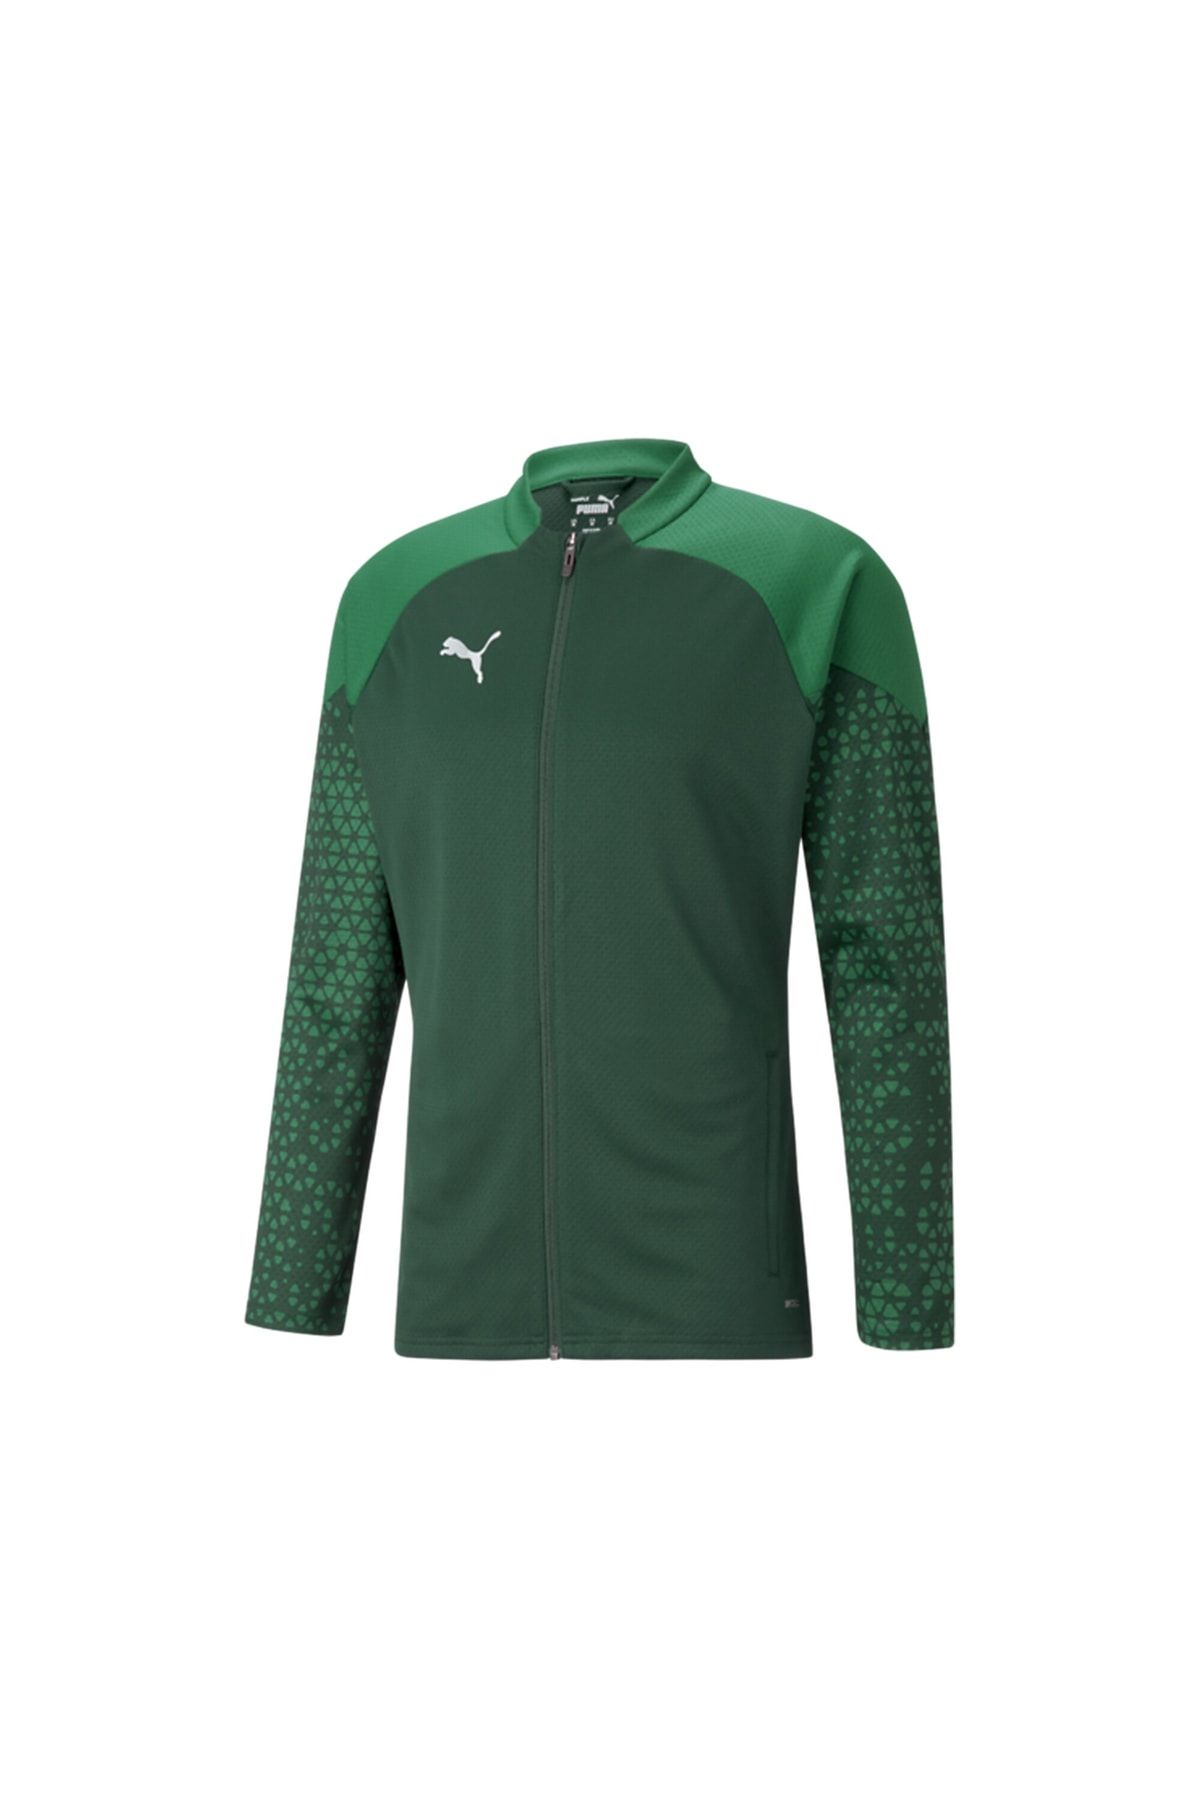 Puma Teamcup Training Jacket Erkek Futbol Antrenman Ceketi 65798305 Yeşil